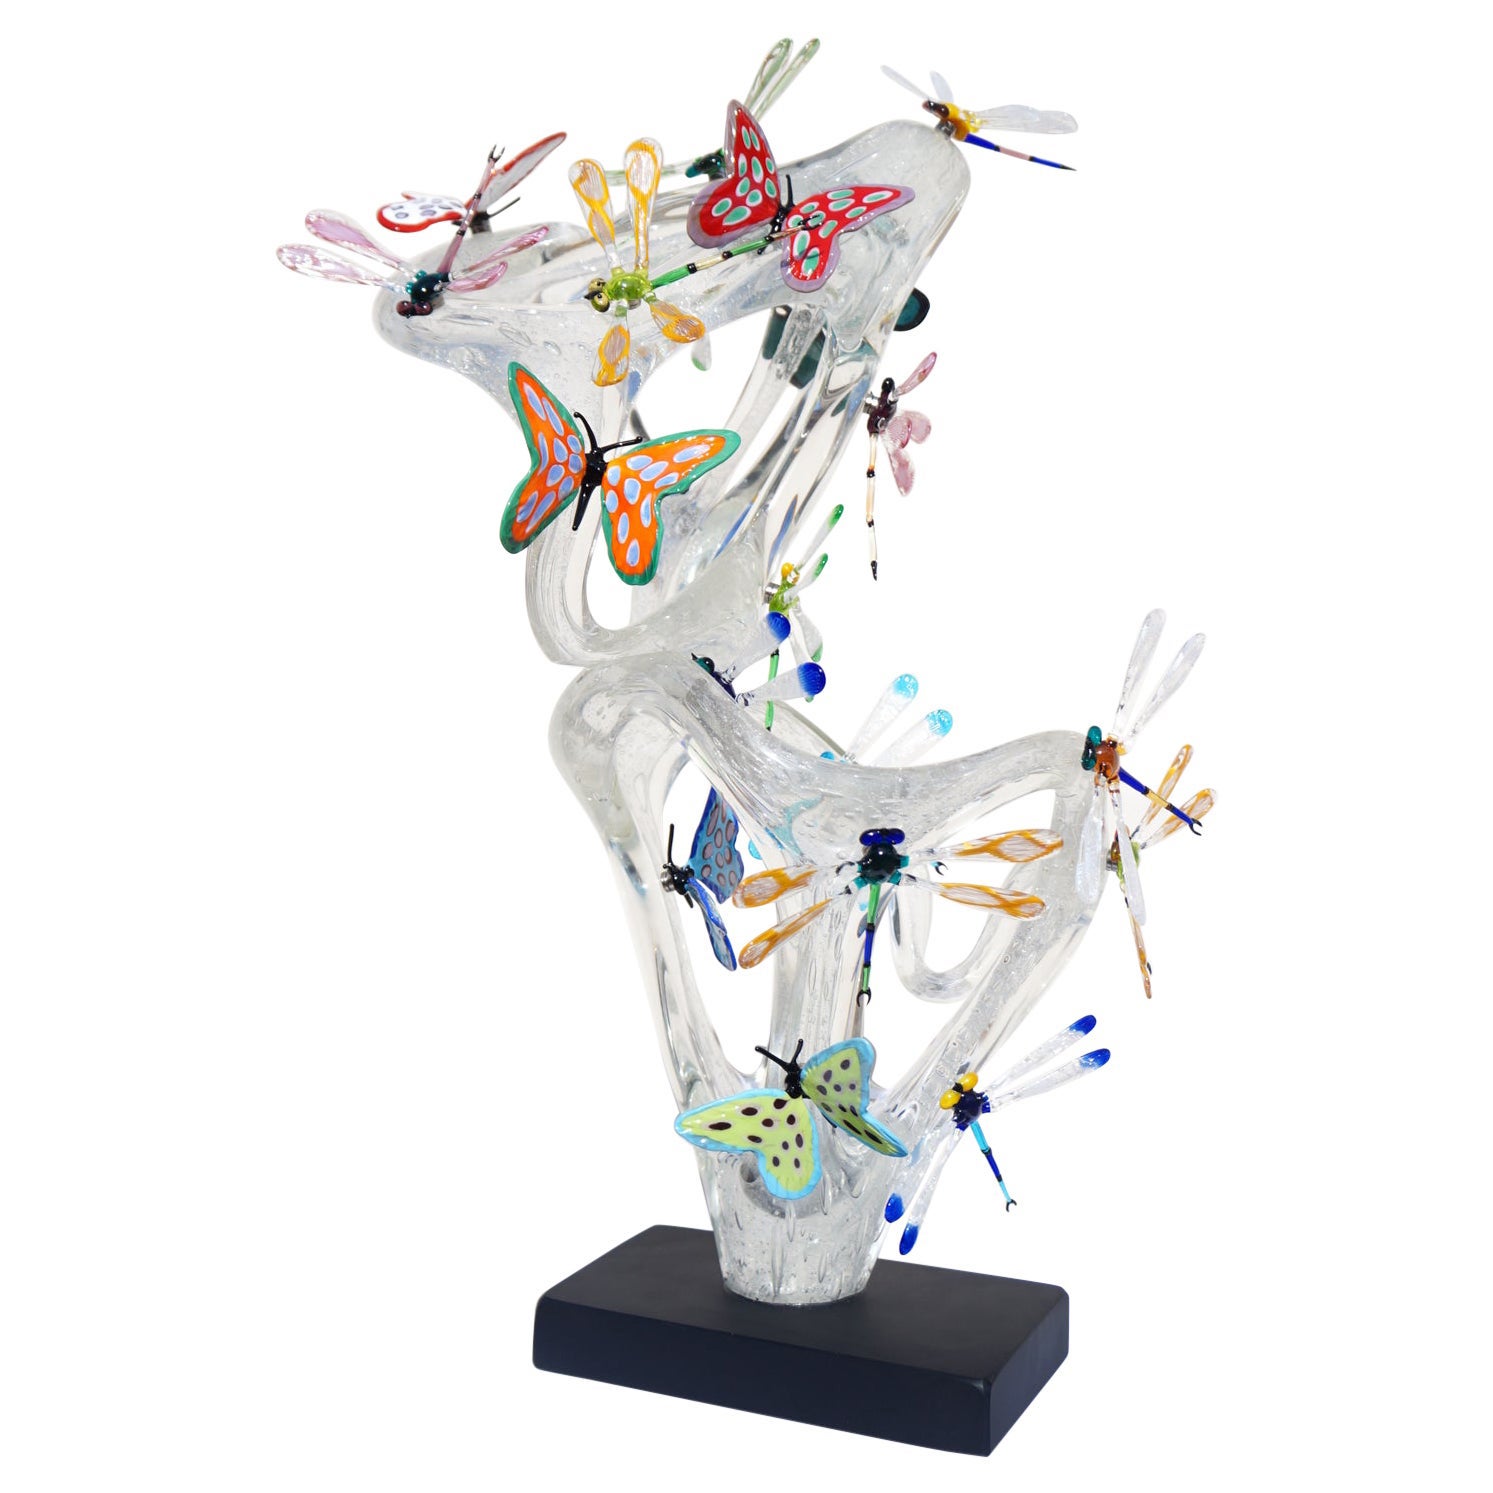 Costantini Modernity Murano Glass Sculpture avec papillons et libellules